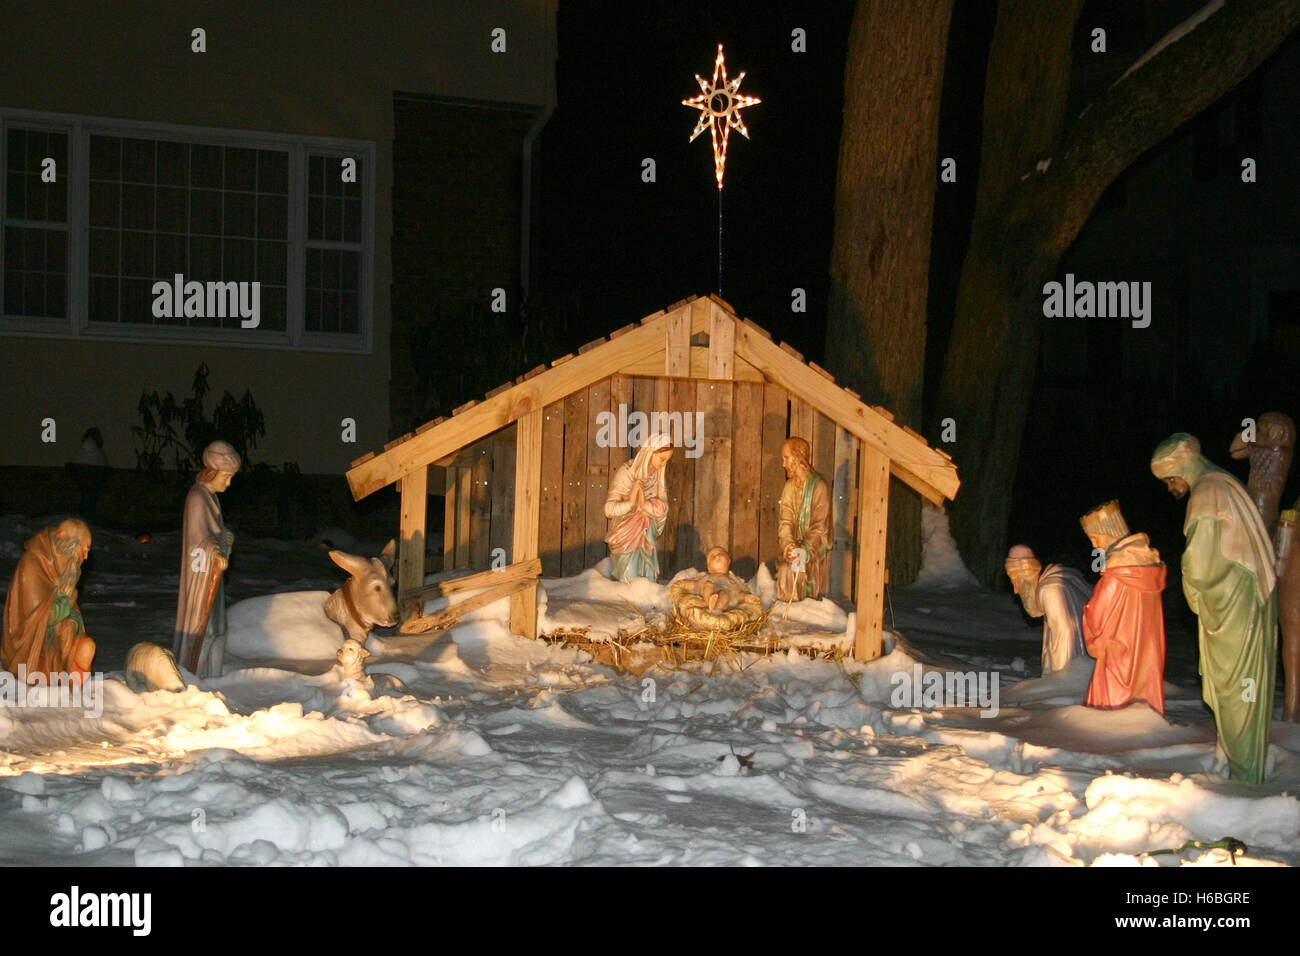 Outdoor Nativity scene Stock Image